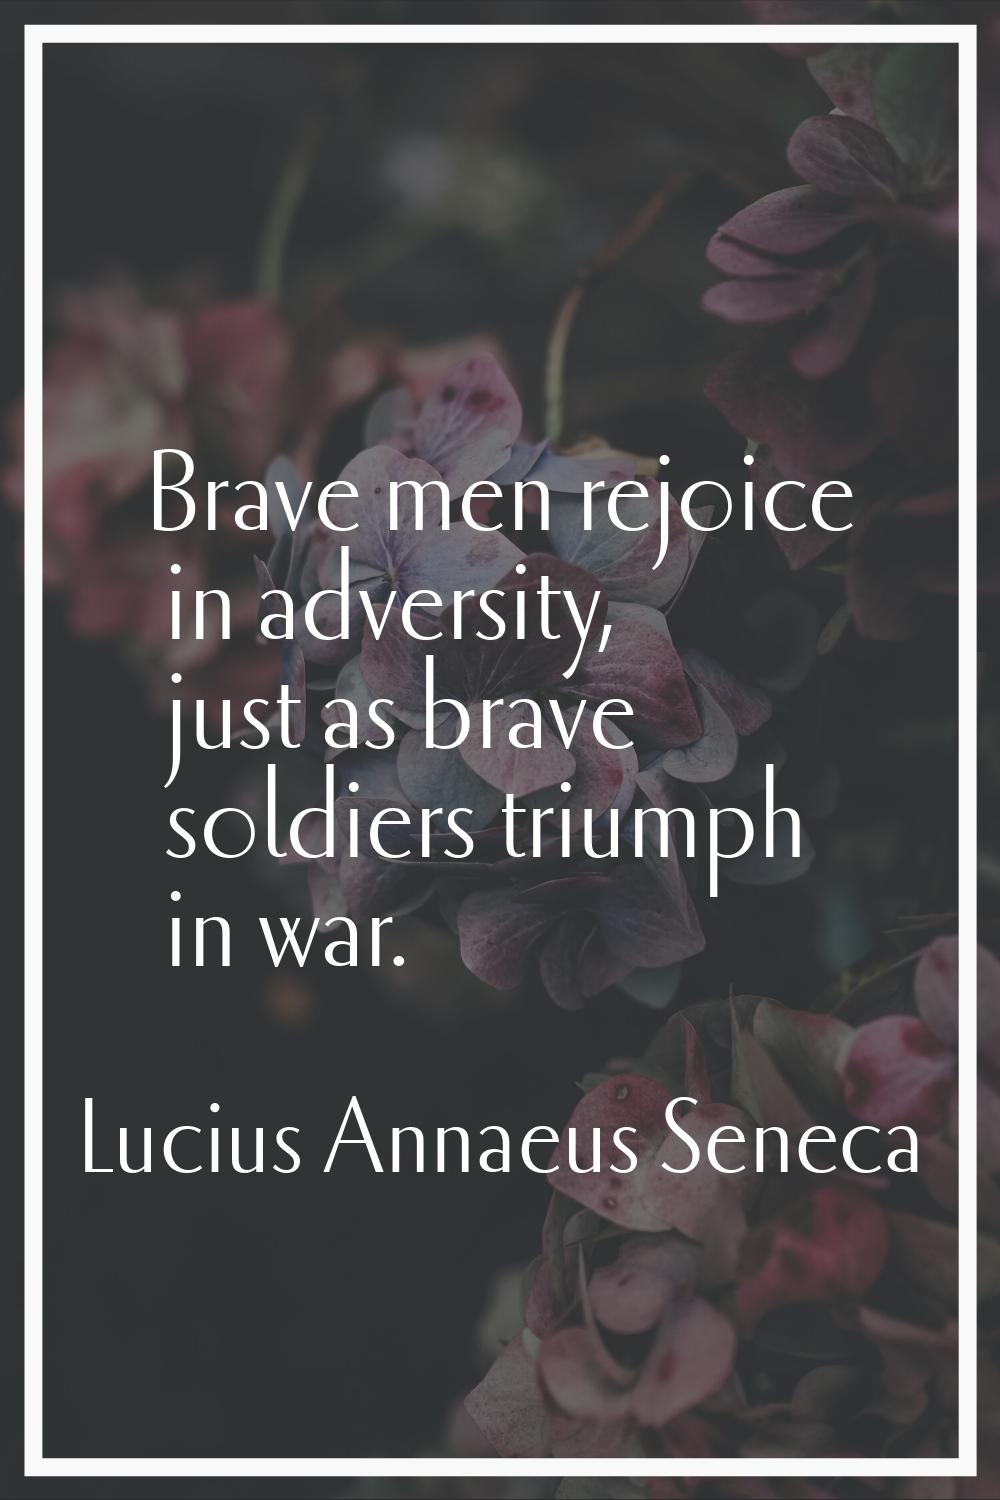 Brave men rejoice in adversity, just as brave soldiers triumph in war.